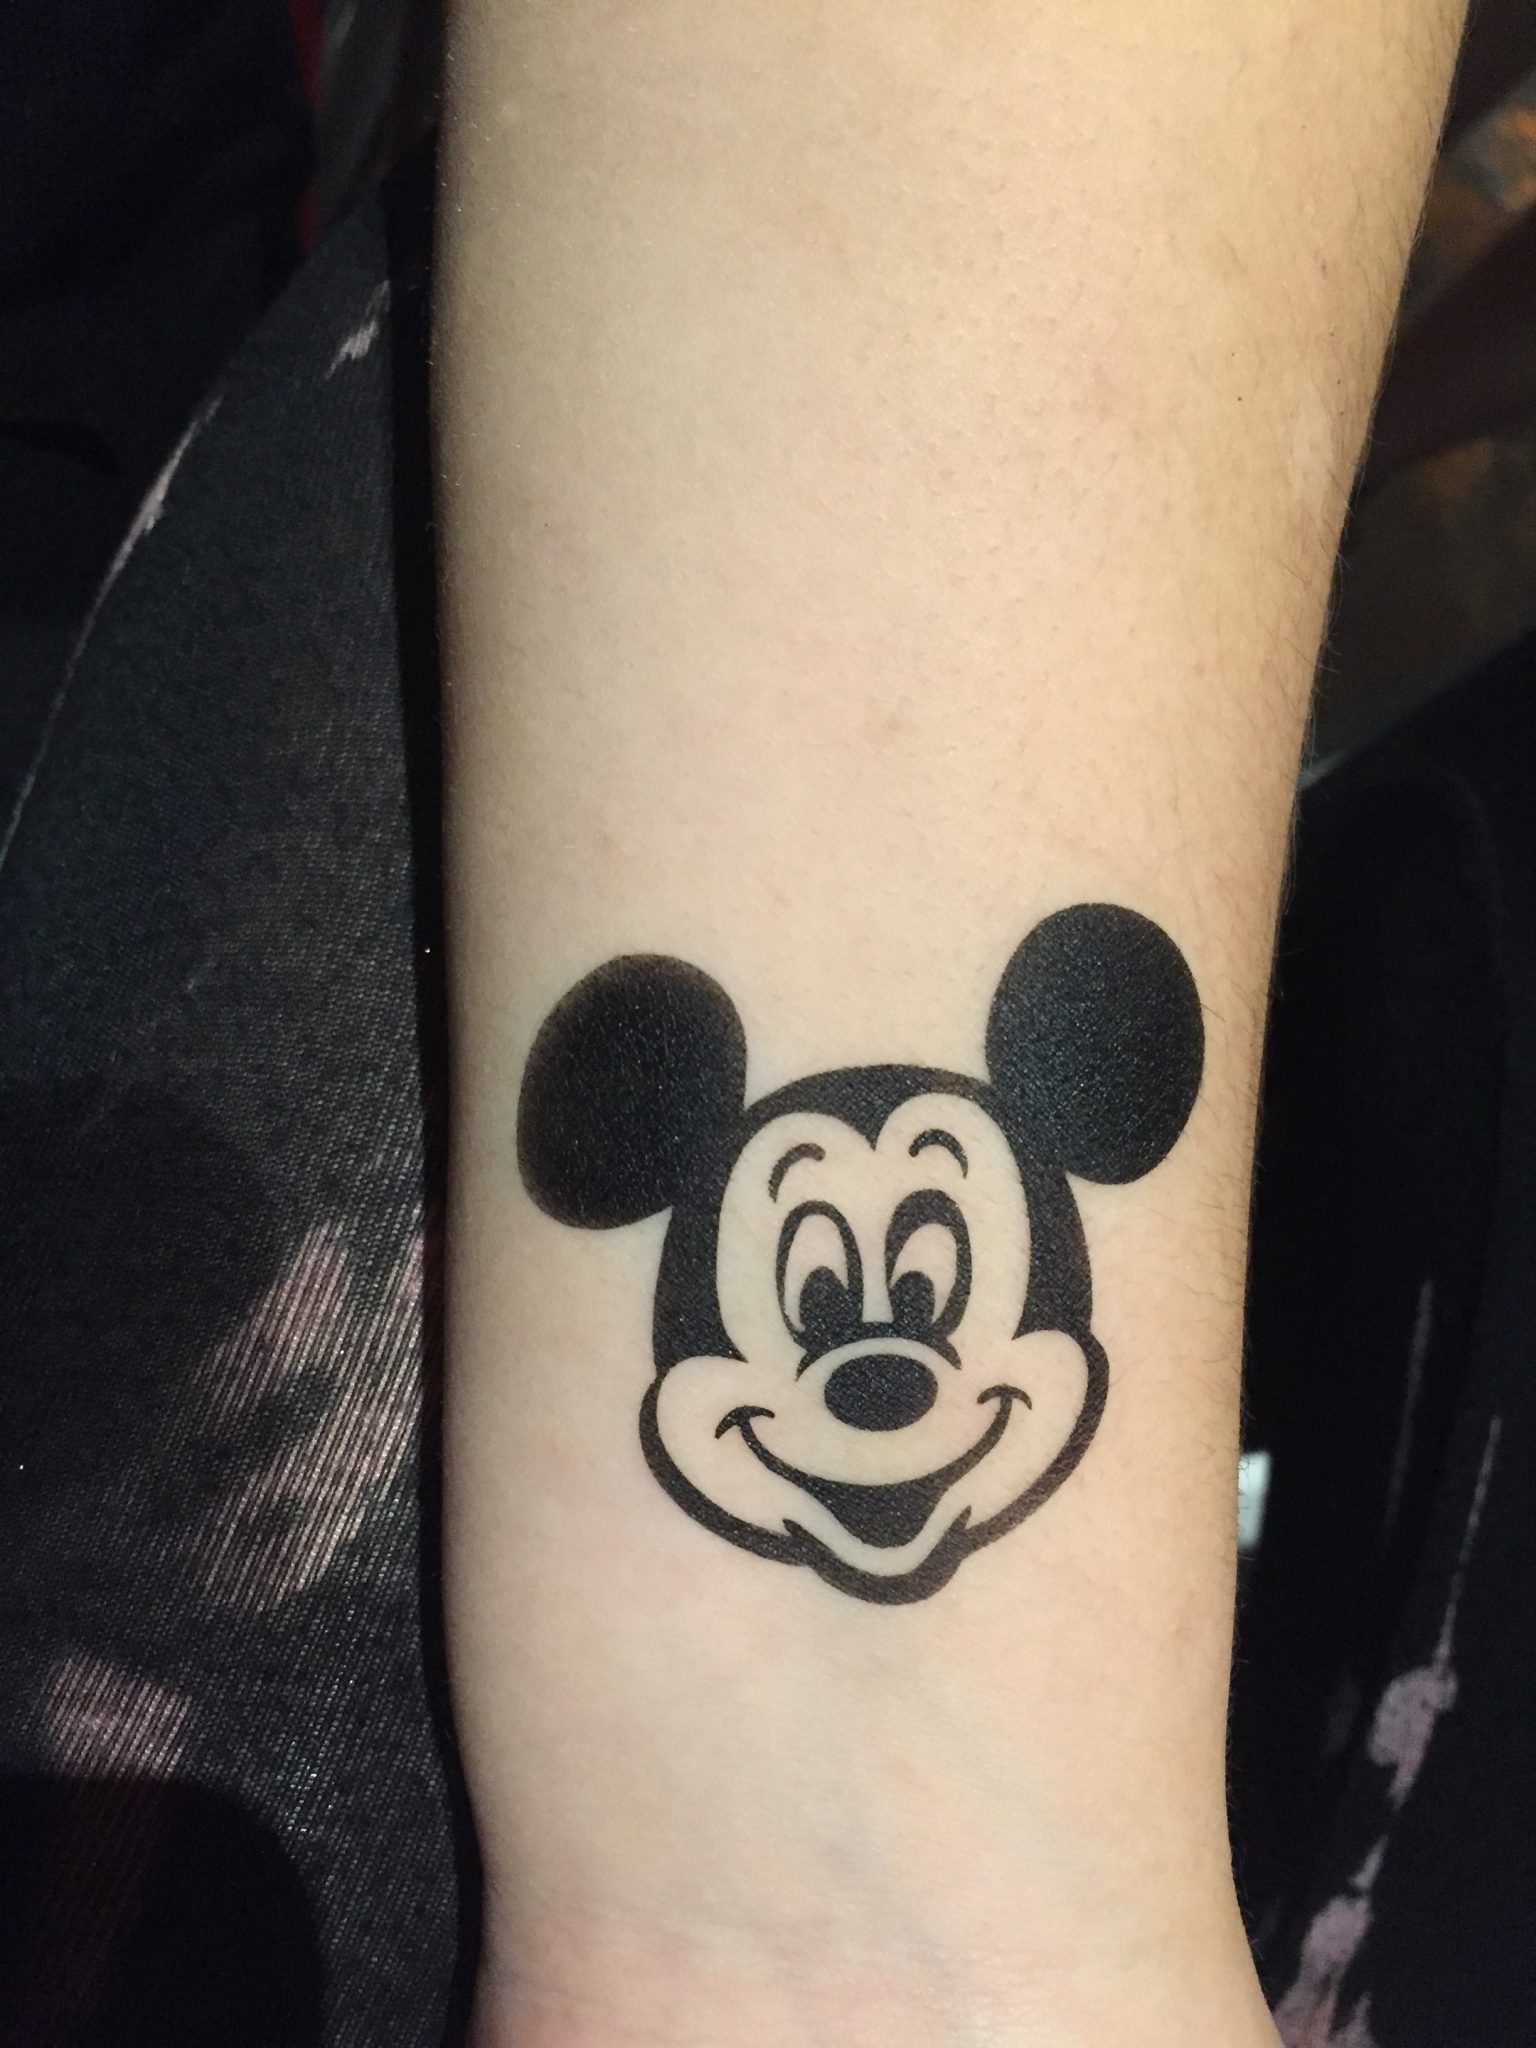 Behind-the-Scenes Look at Henna Tattoos at Walt Disney World •  DisneyTips.com